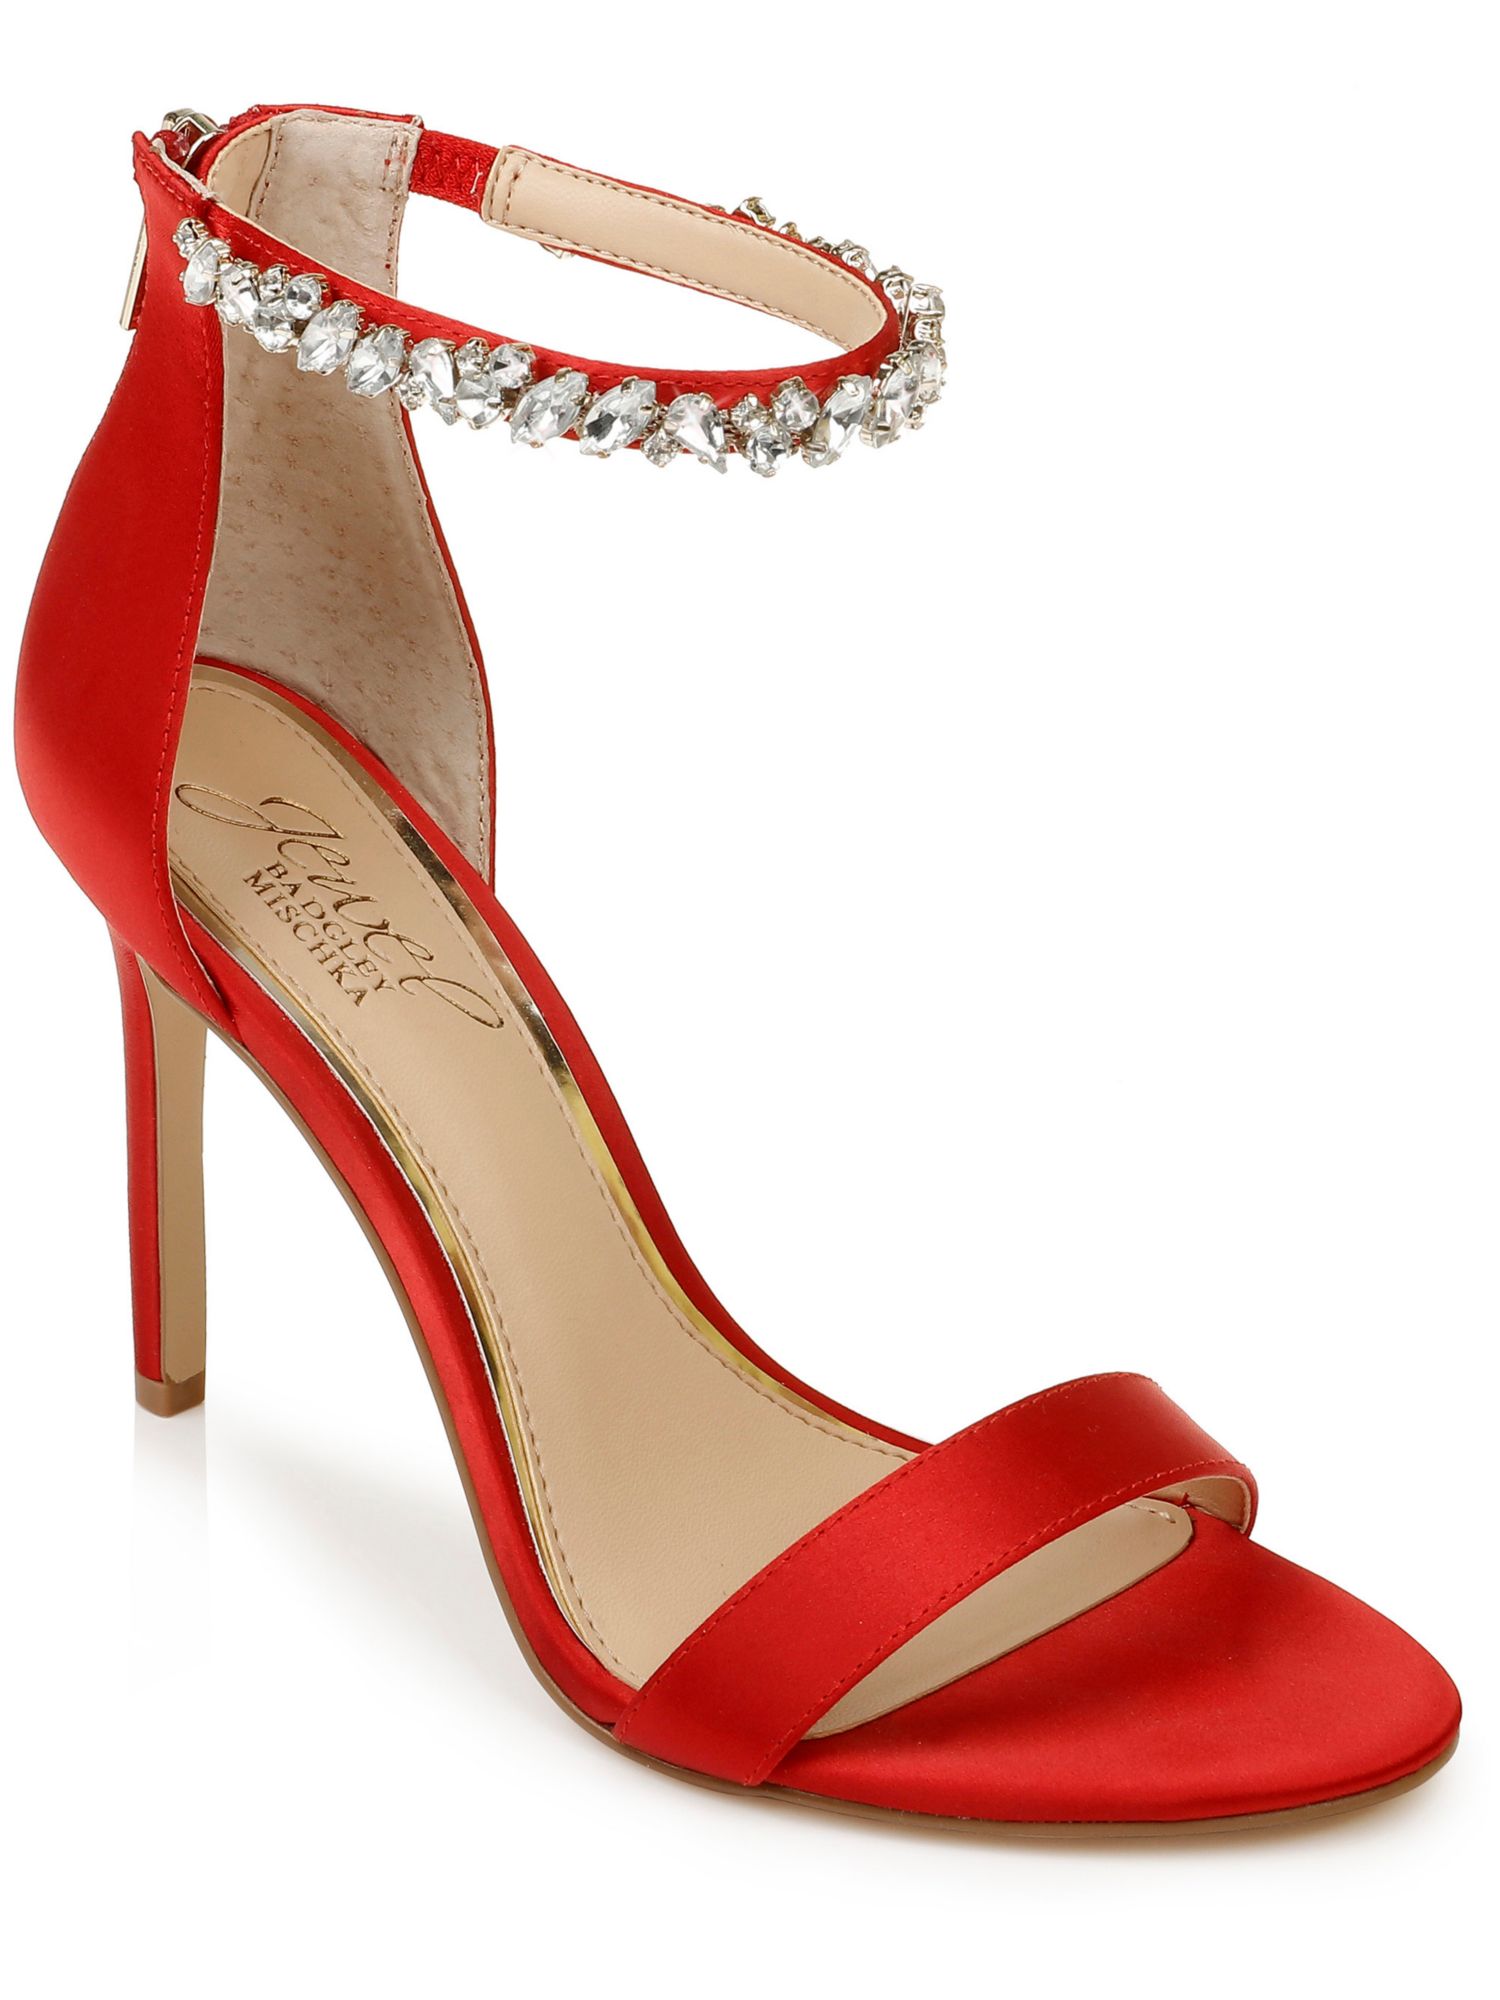 JEWEL BADGLEY MISCHKA Womens Red Ankle Strap Embellished Unique Round Toe Stiletto Zip-Up Dress Sandals 9 M